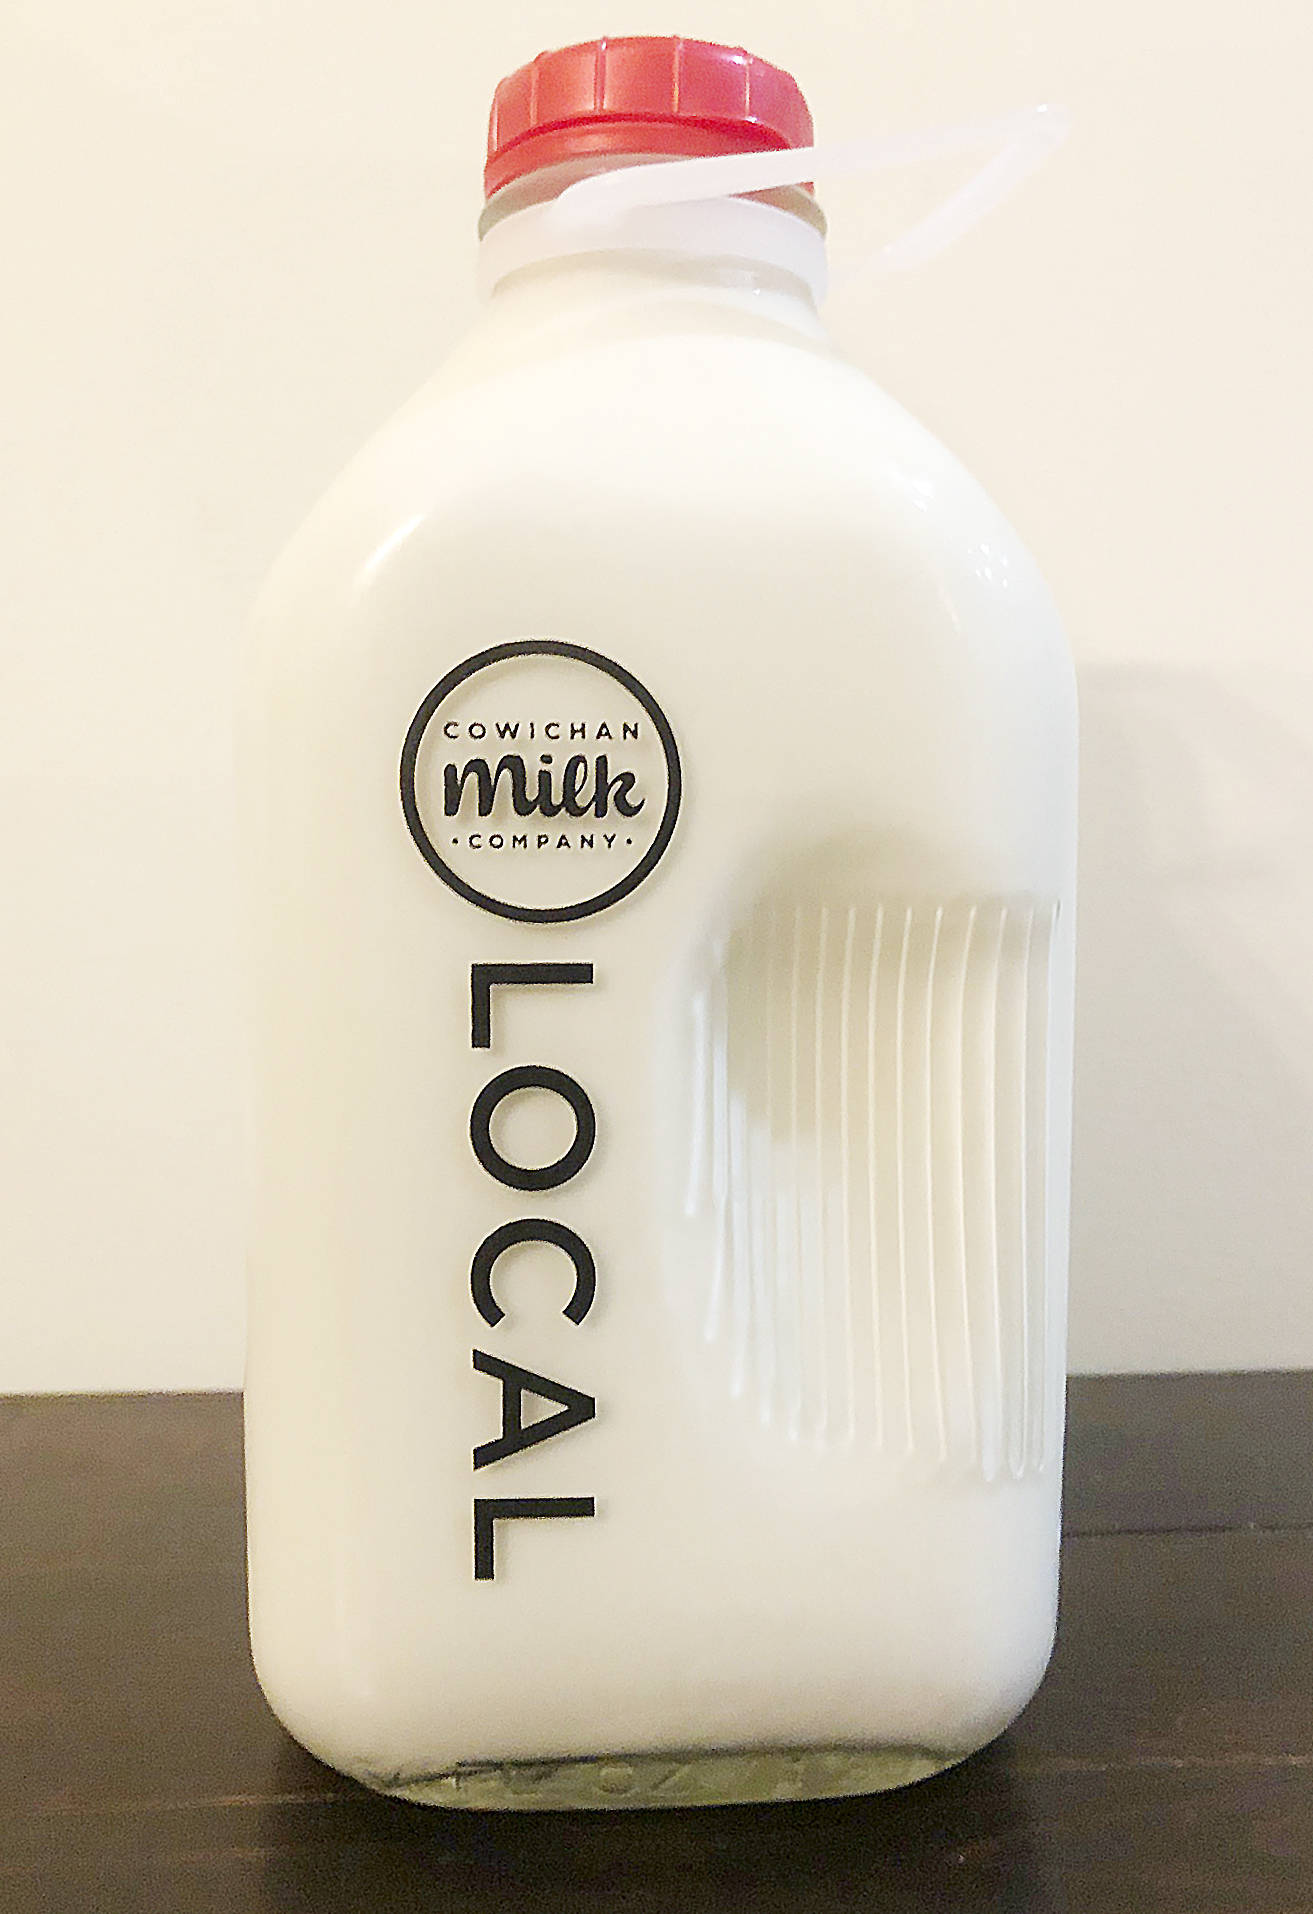 19490722_web1_191120-CCI-AG-cowichan-milk-co_4